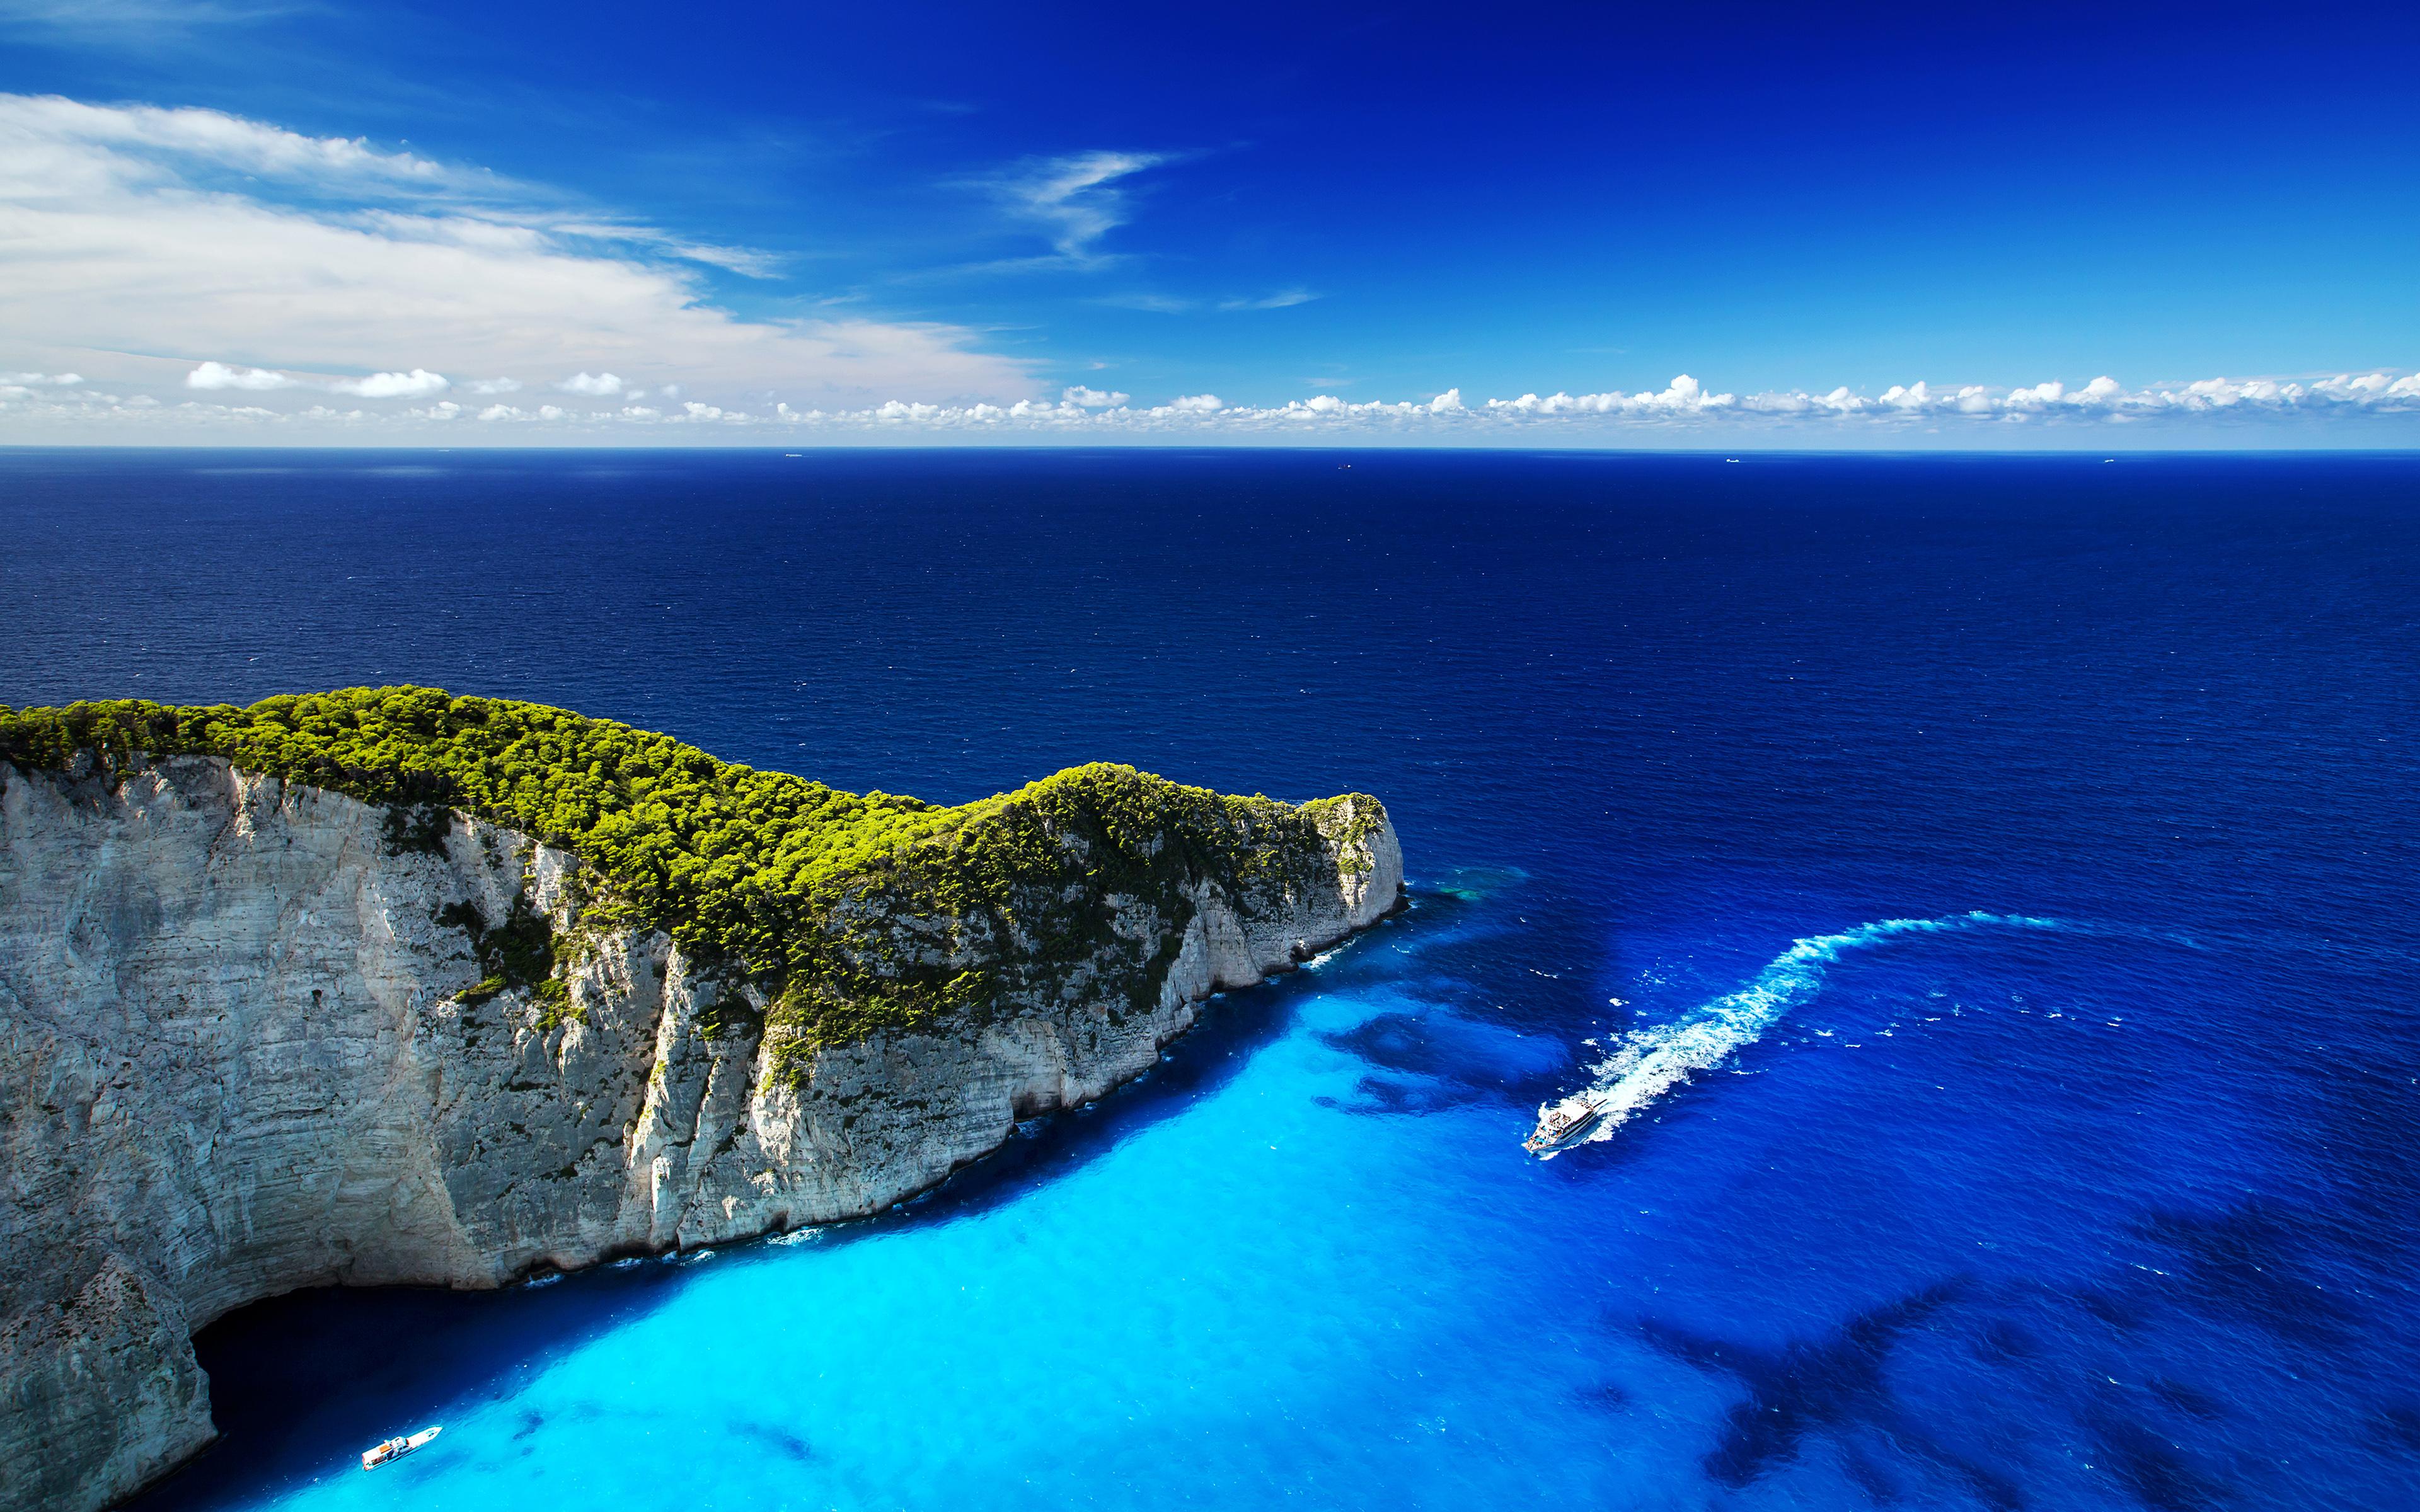 Download wallpaper Greek island, Ionian sea, seascape, travel